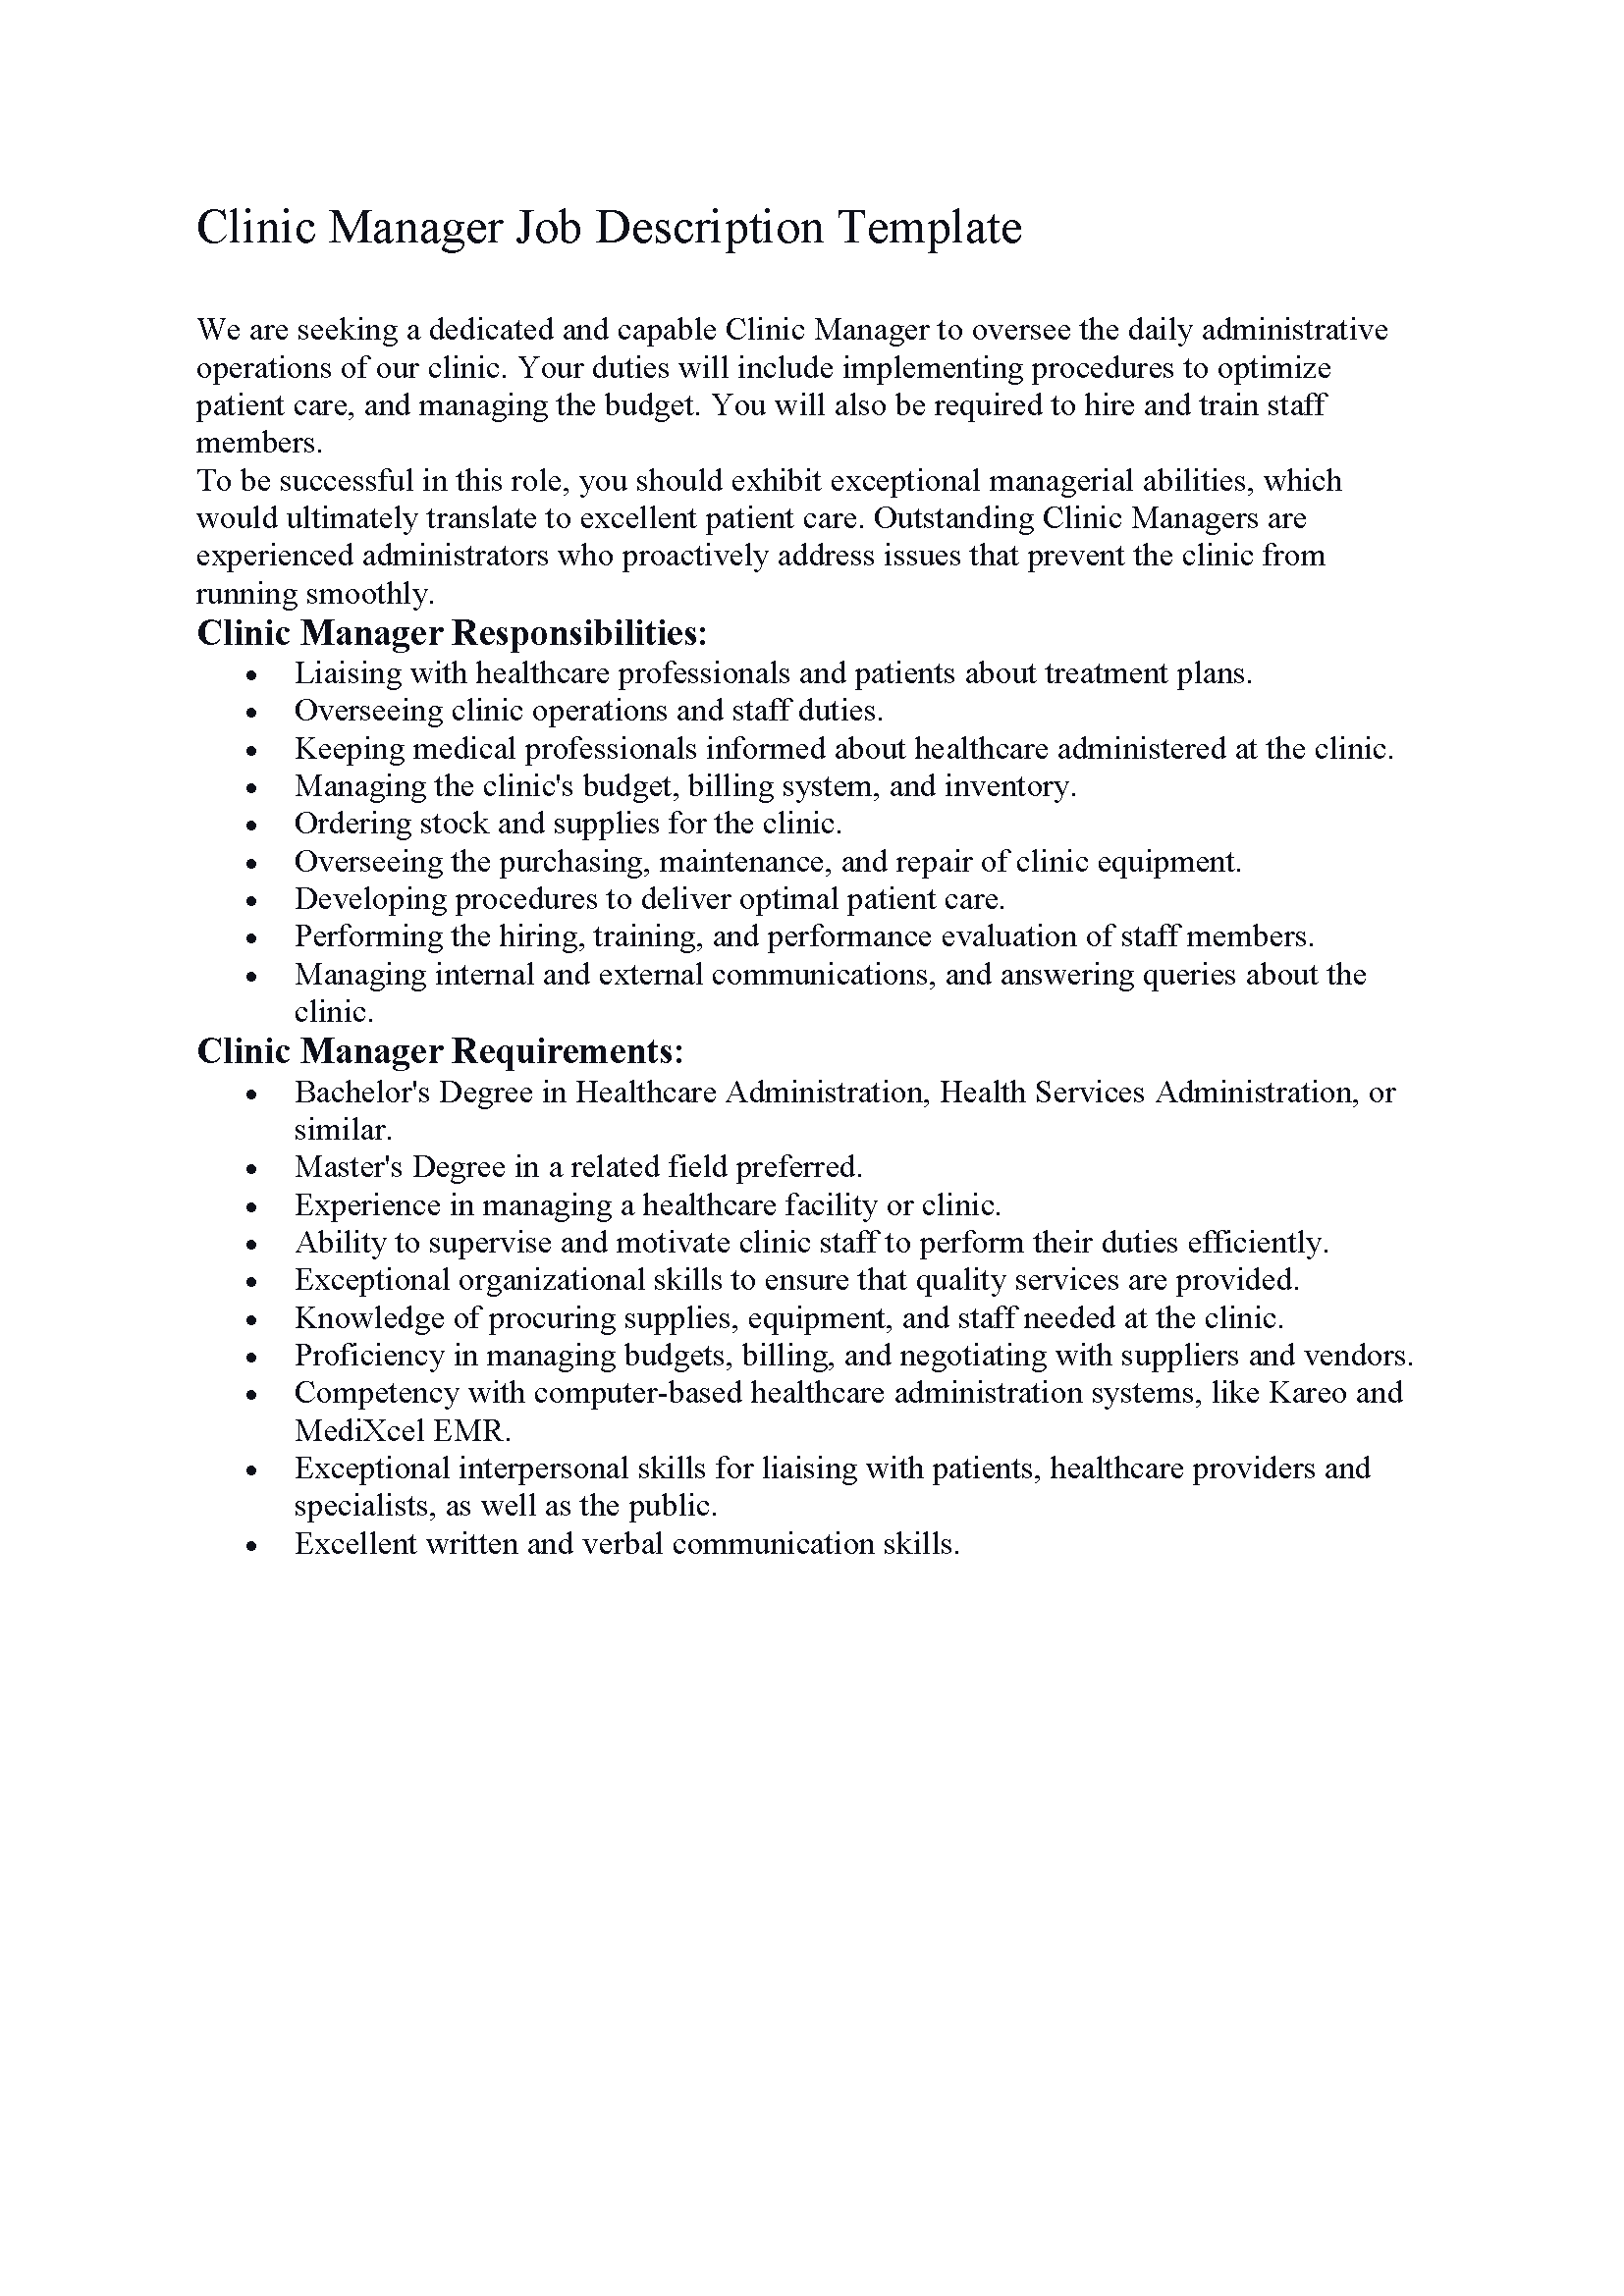 Clinic Manager Job Description Template